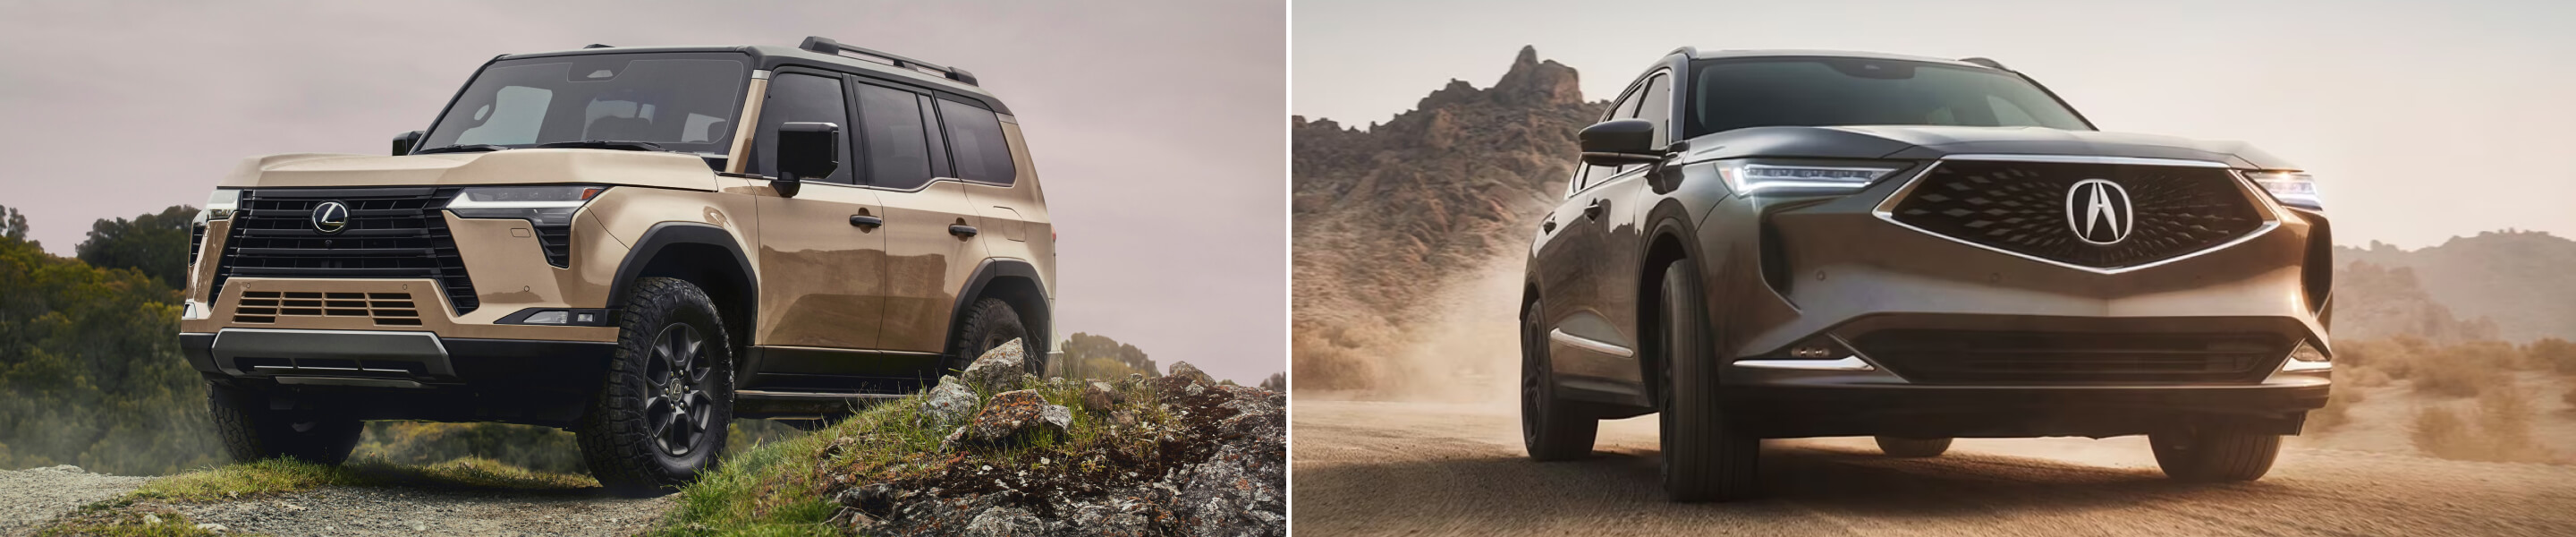 Lexus vs. Acura brand comparison